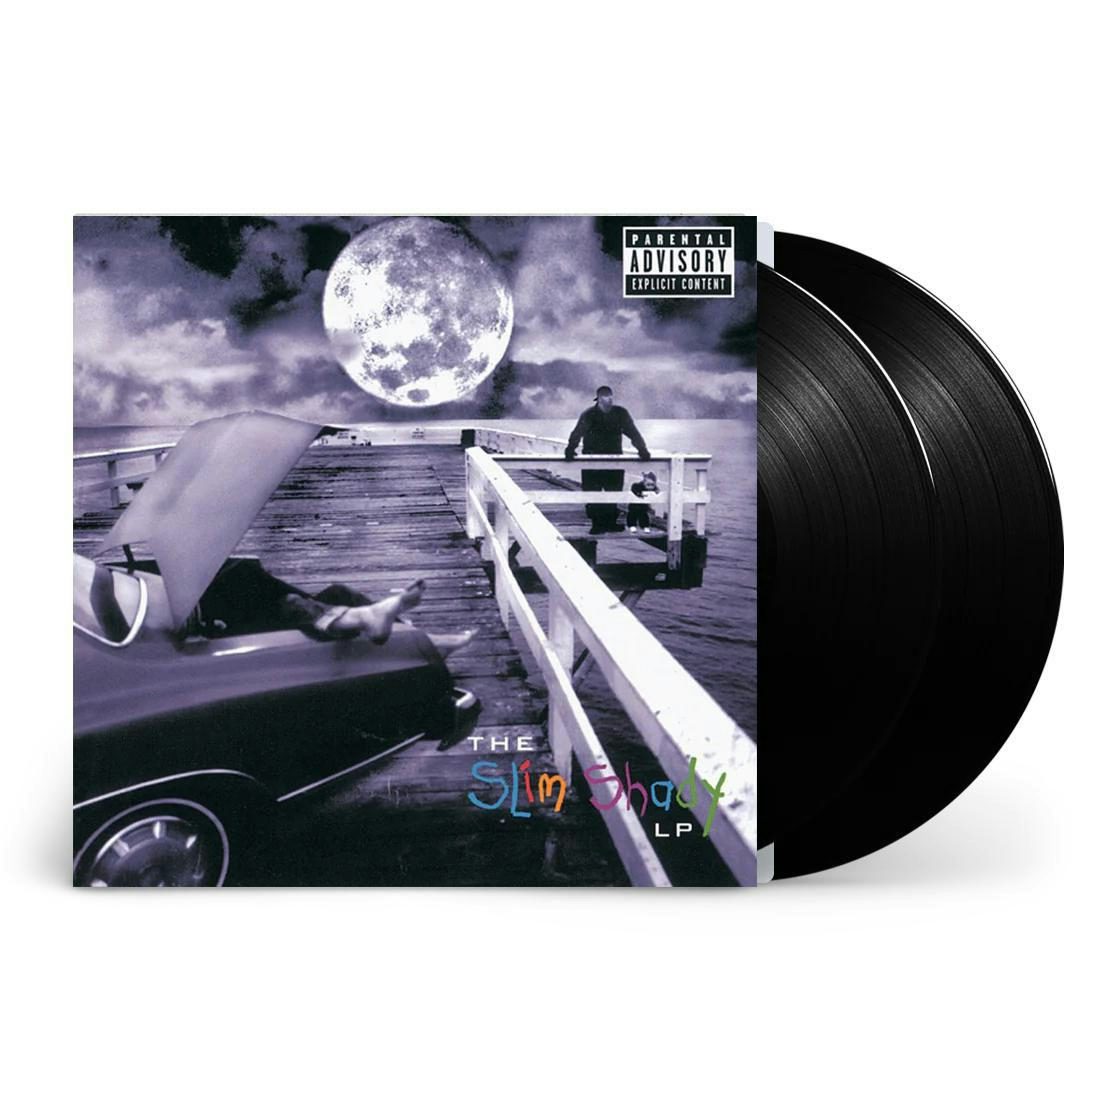 Slim Shady Lp (2LP) Vinyl Record - Eminem